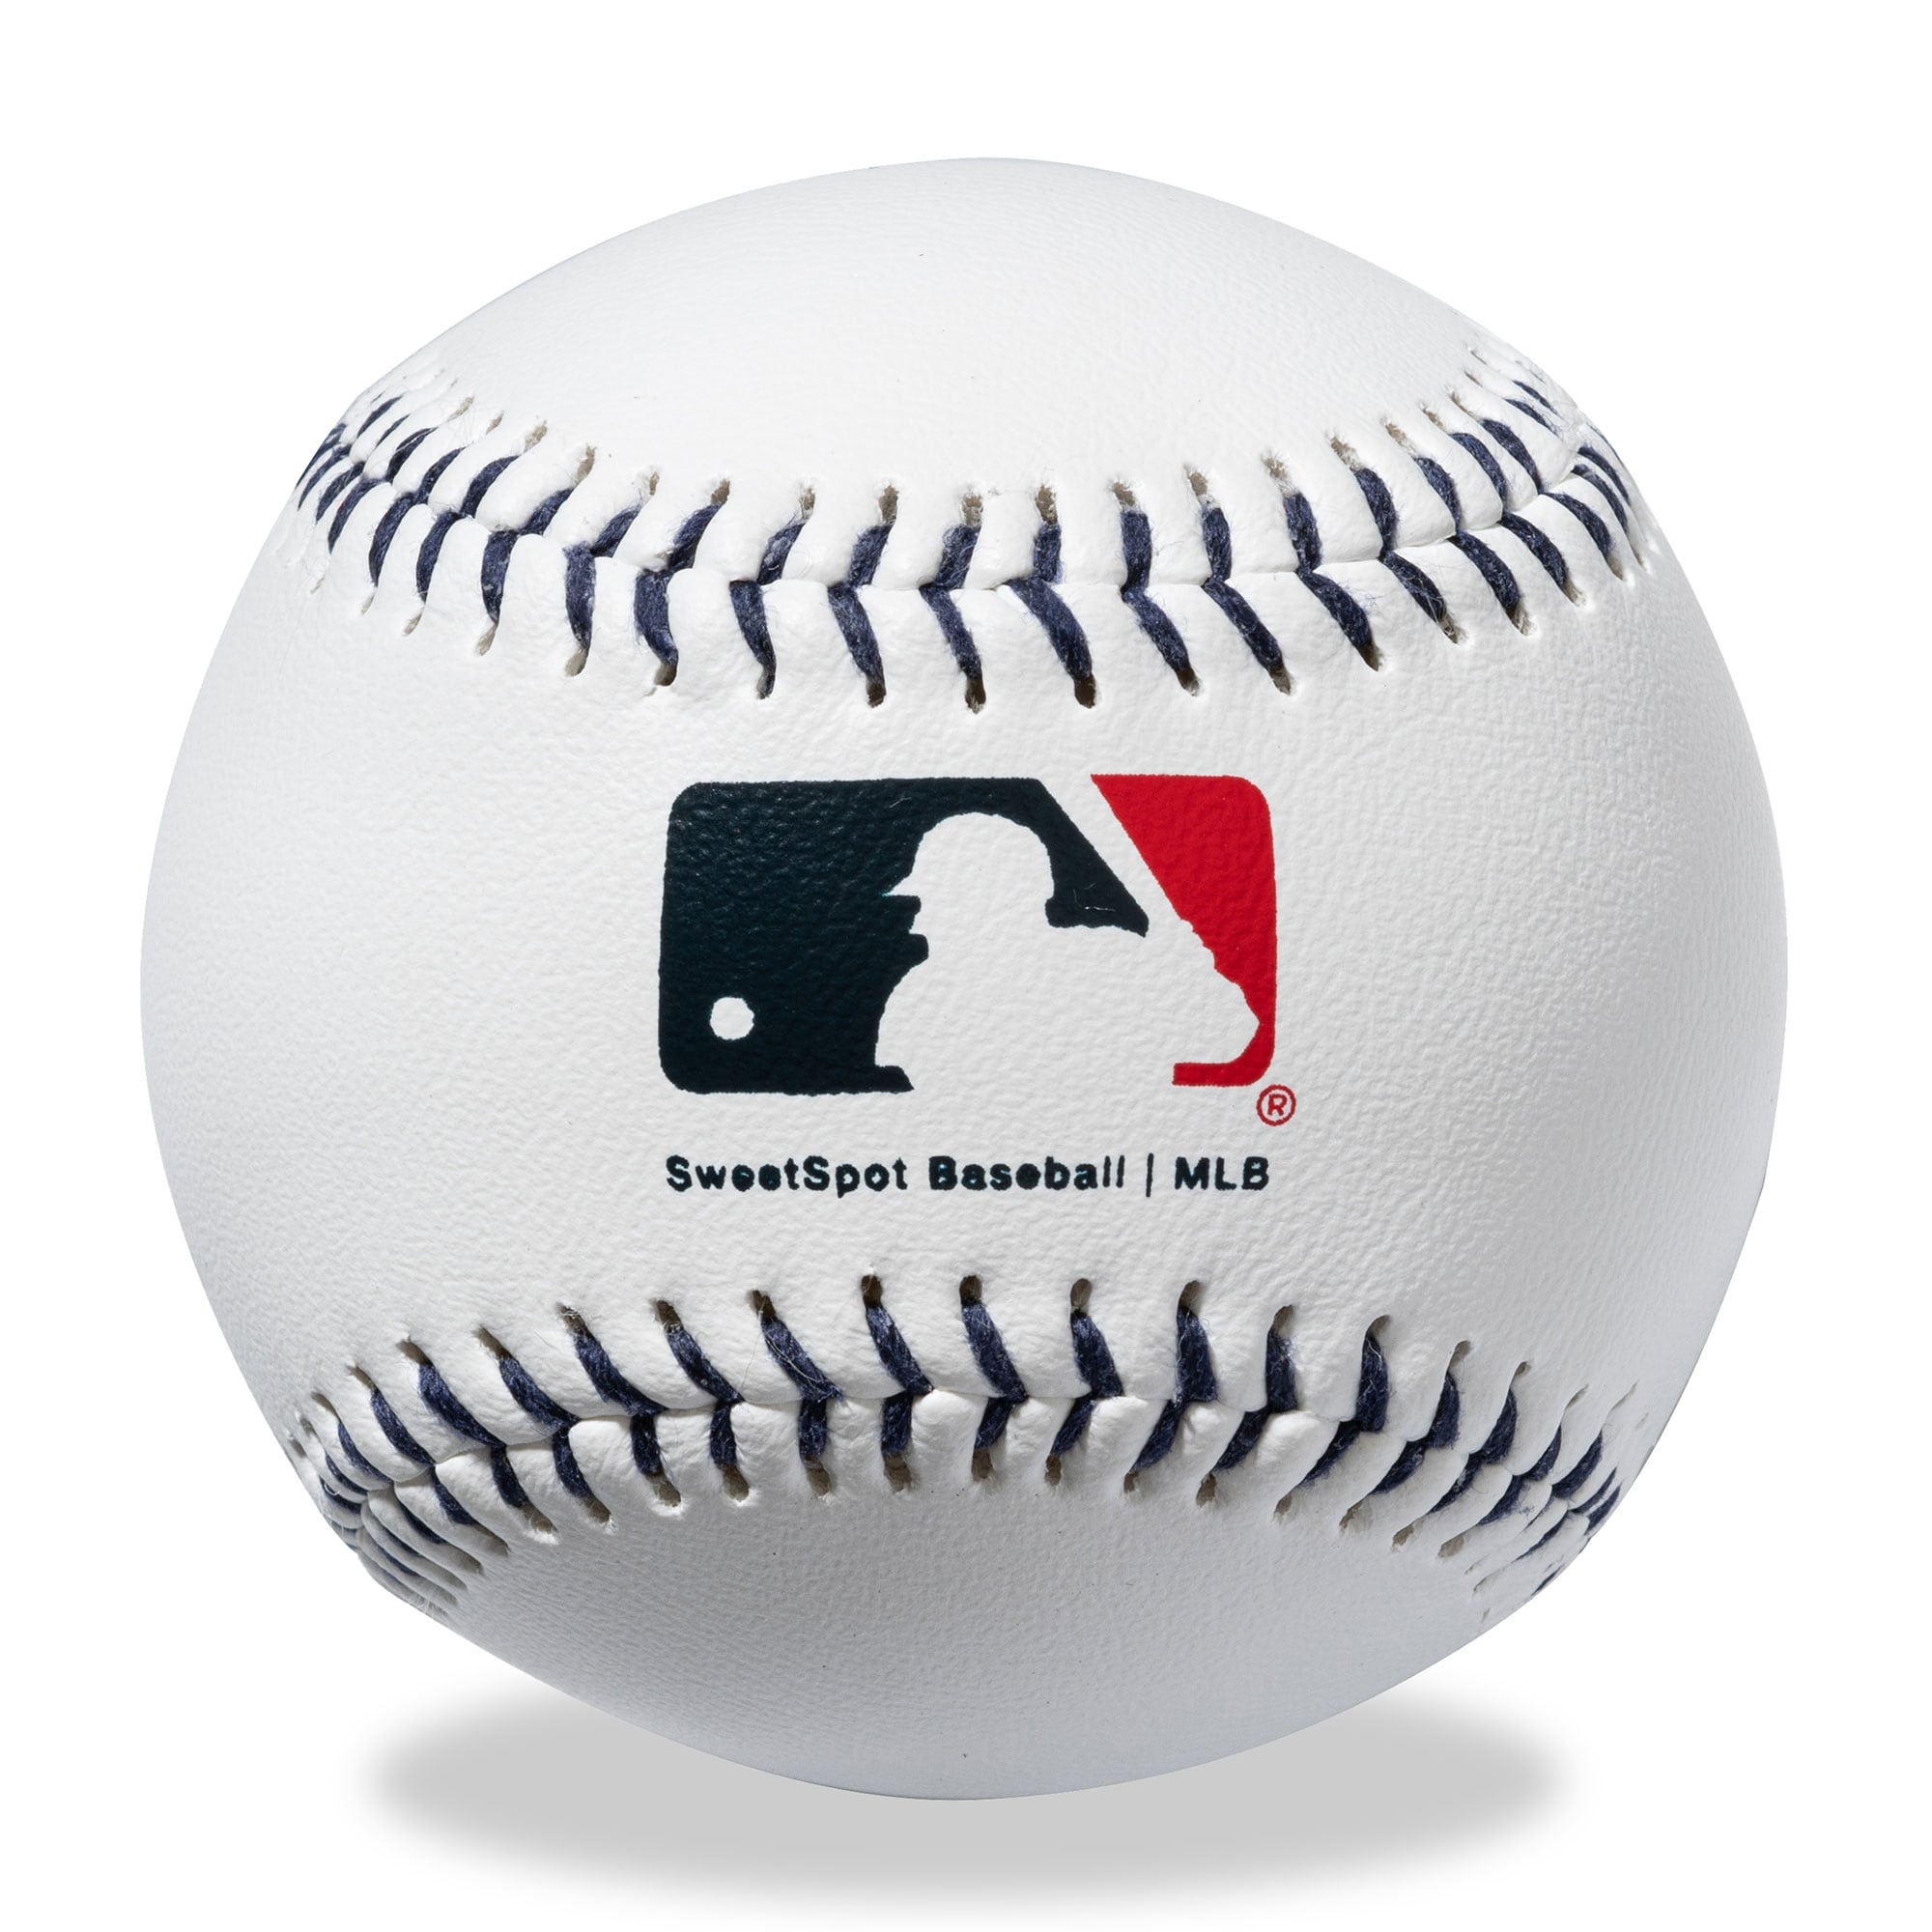 SweetSpot Baseball Baltimore Orioles Spaseball 2-Pack - image 3 of 5